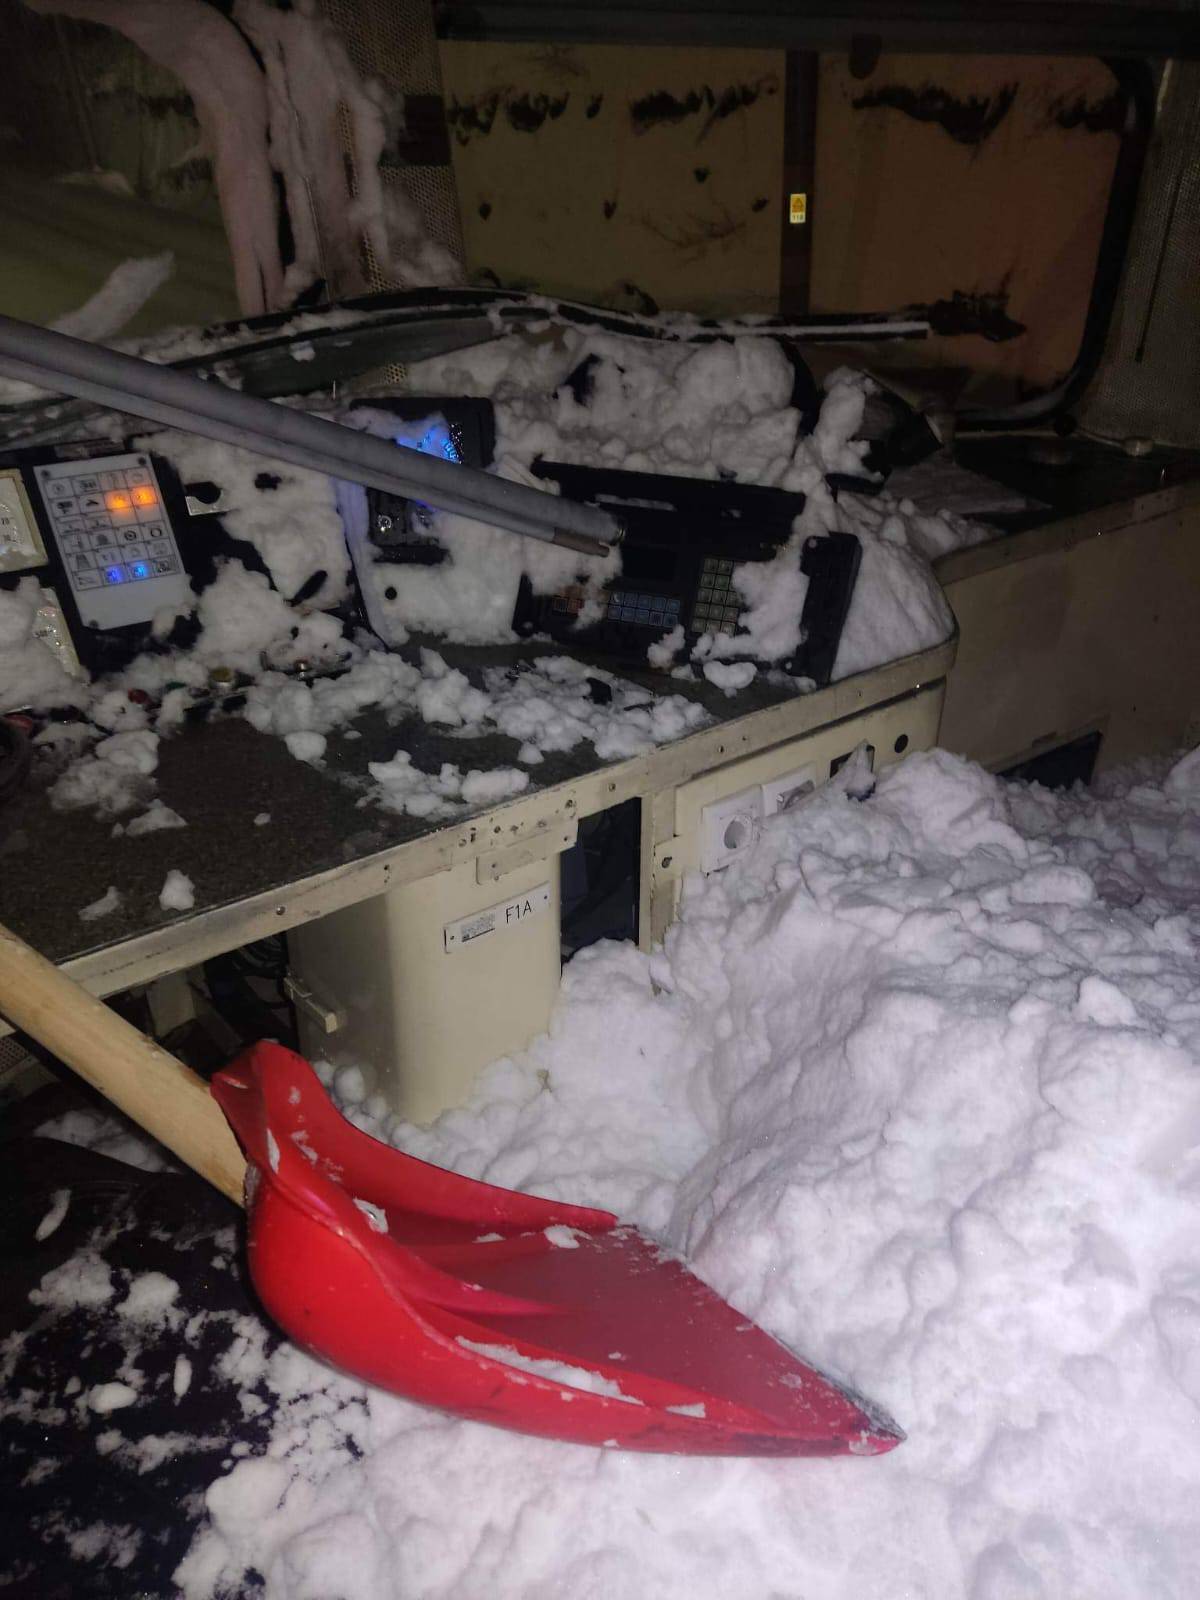 Ekskluzivne fotografije: Vlak kod Delnica naletio na snježni nanos, kabina skroz uništena